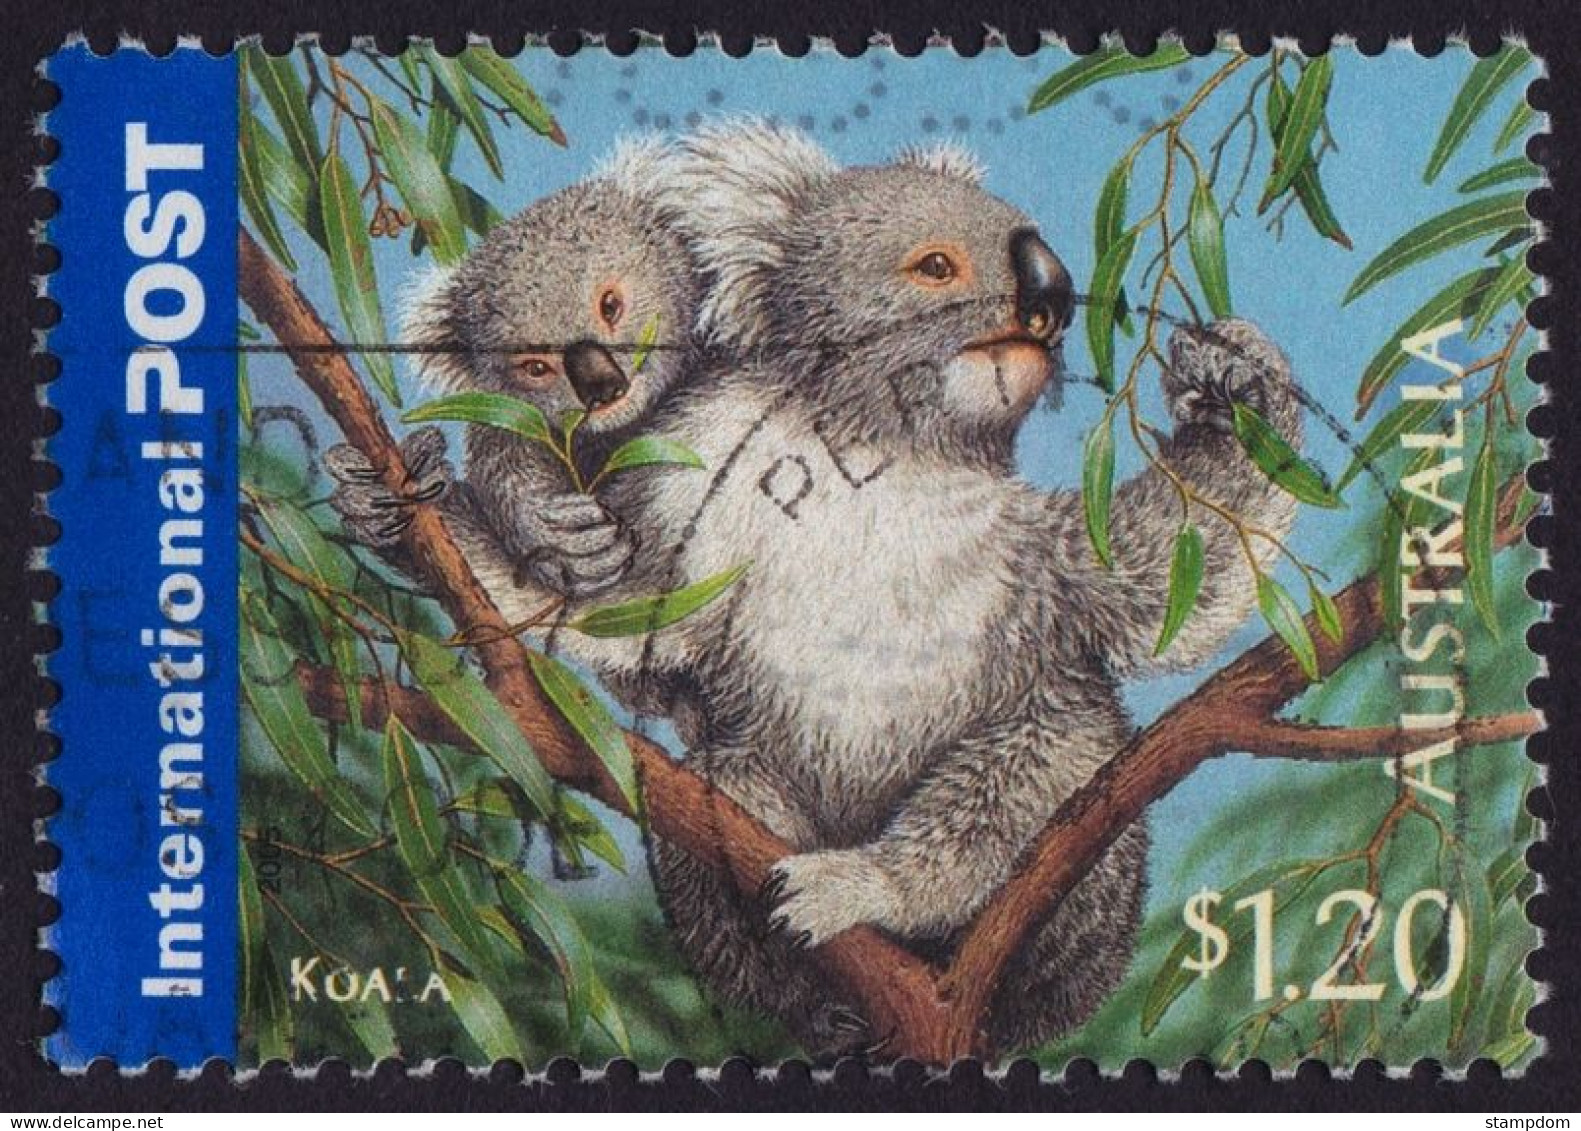 AUSTRALIA  2005 Animals Int'l Post $1.20 Koala Sc#2388 USED @O414 - Used Stamps